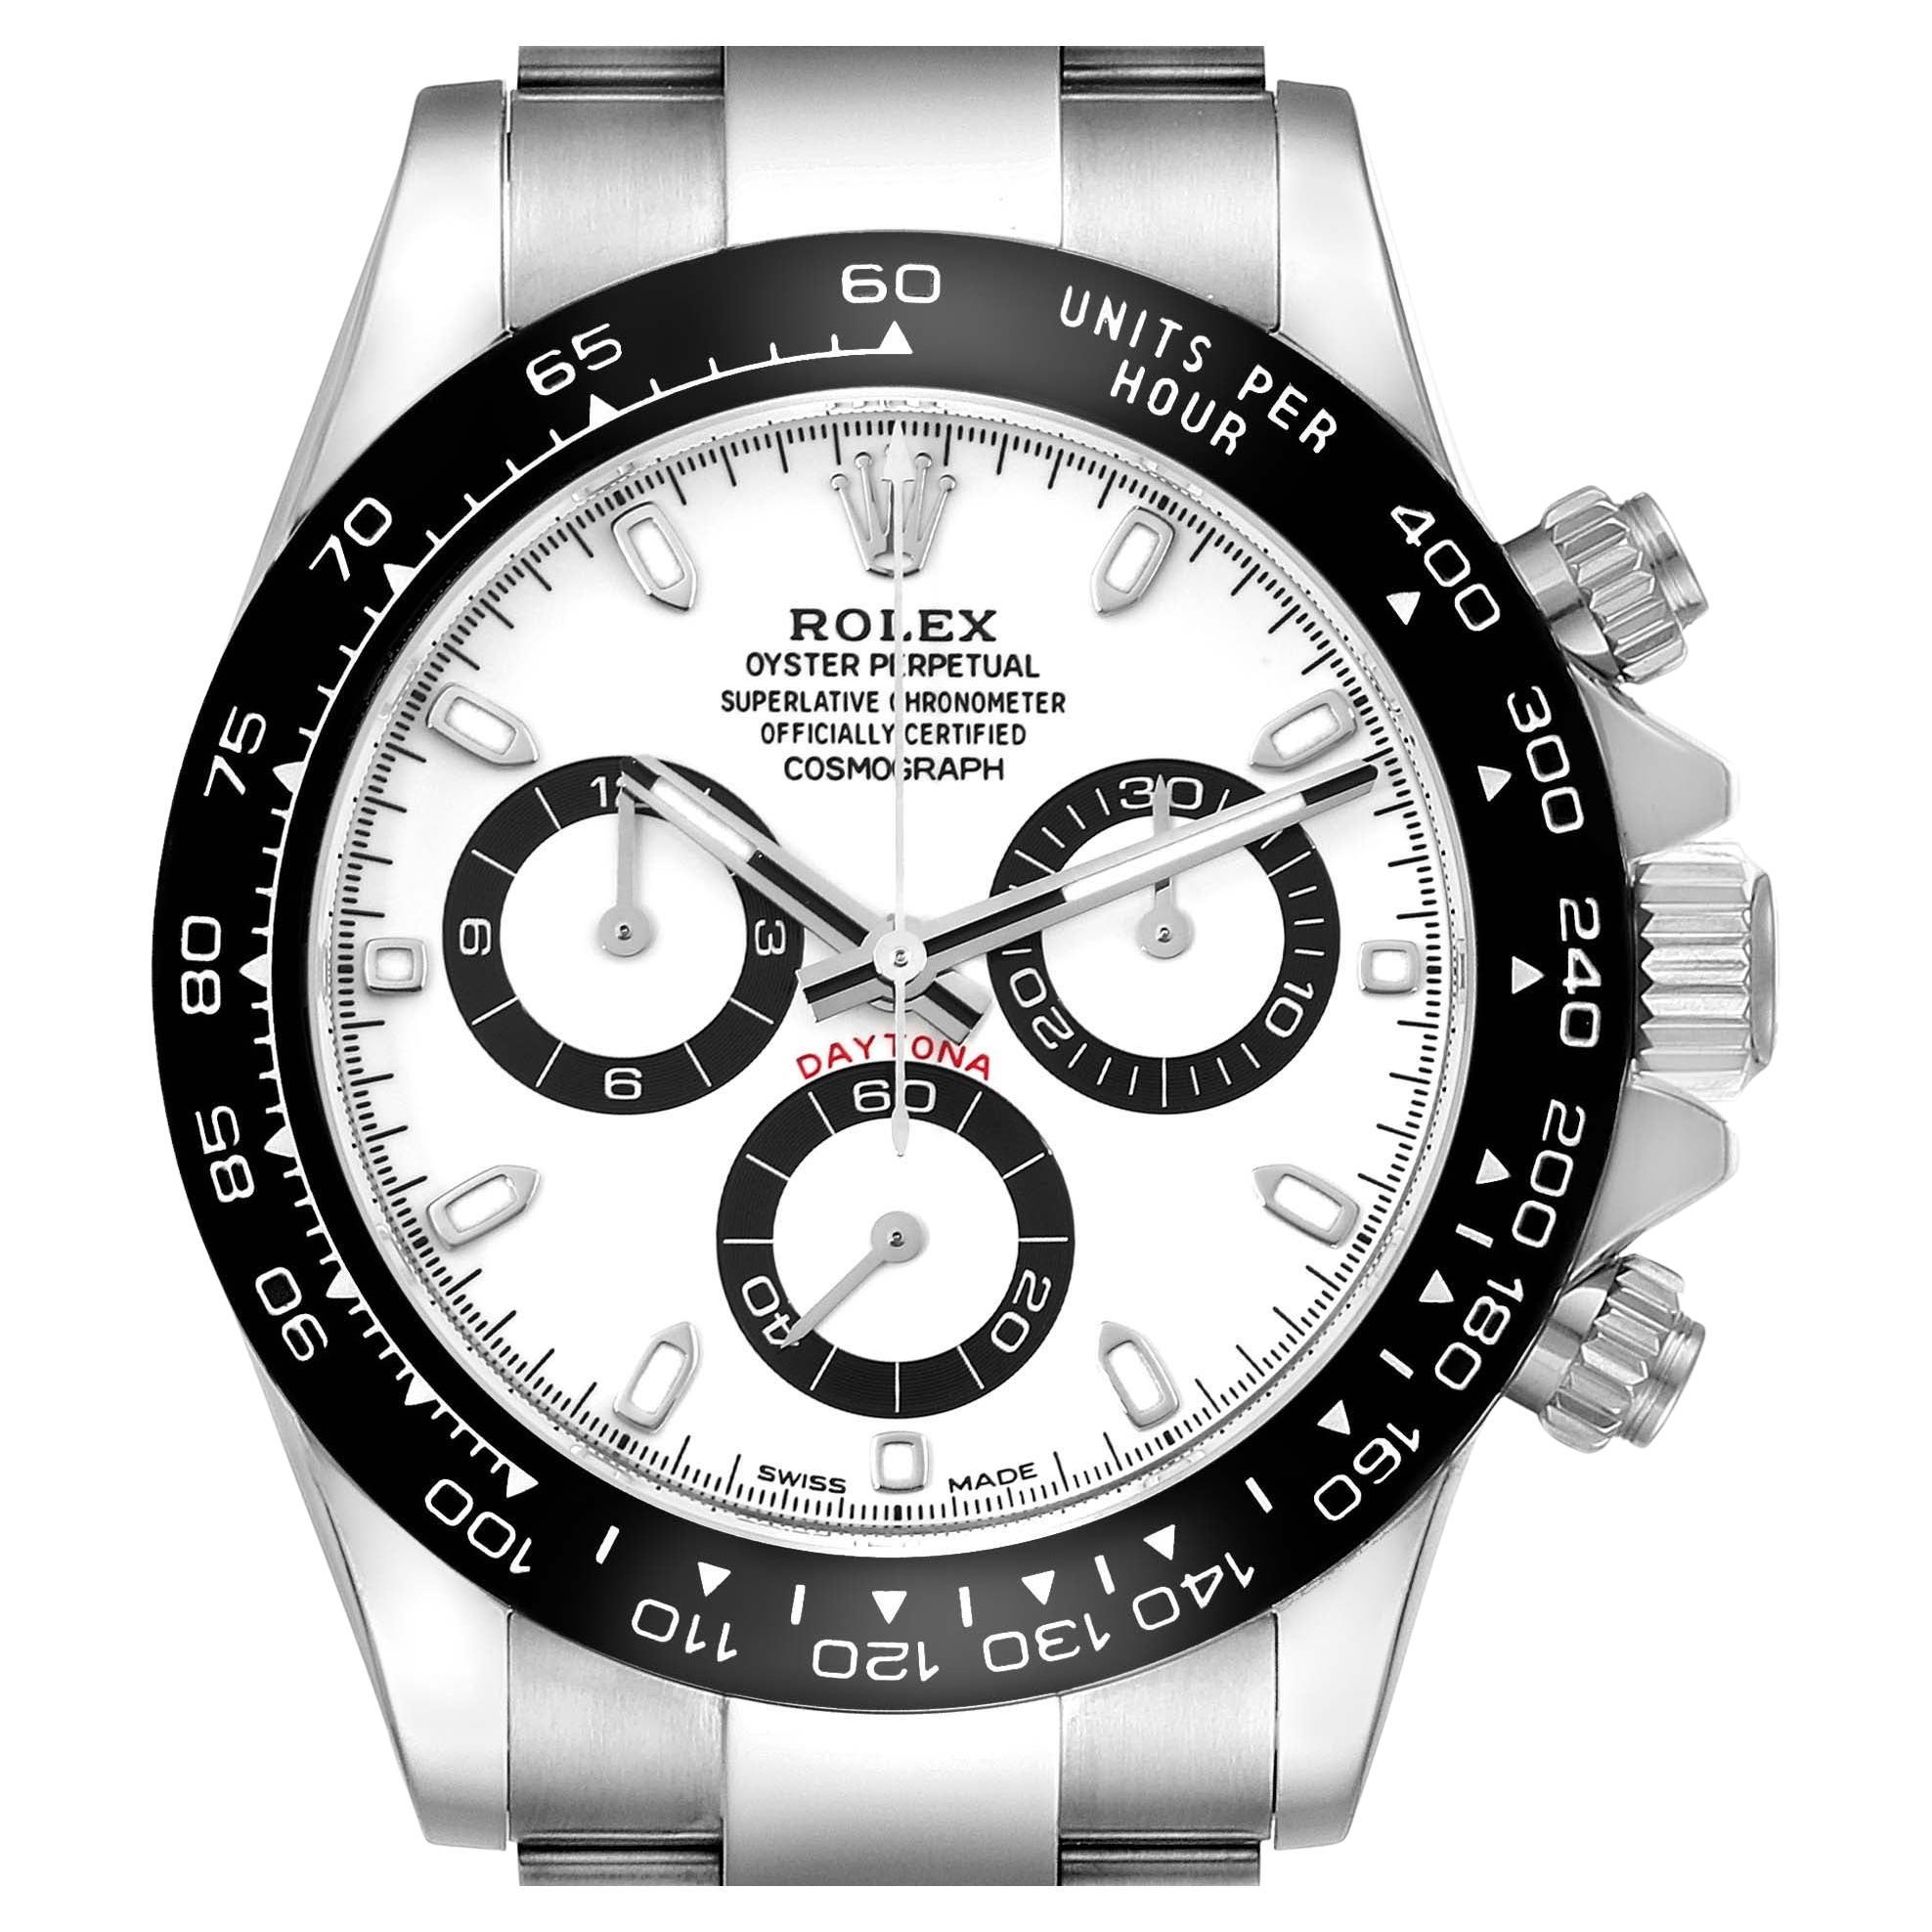 Rolex Daytona Ceramic Bezel White Panda Dial Steel Mens Watch 116500